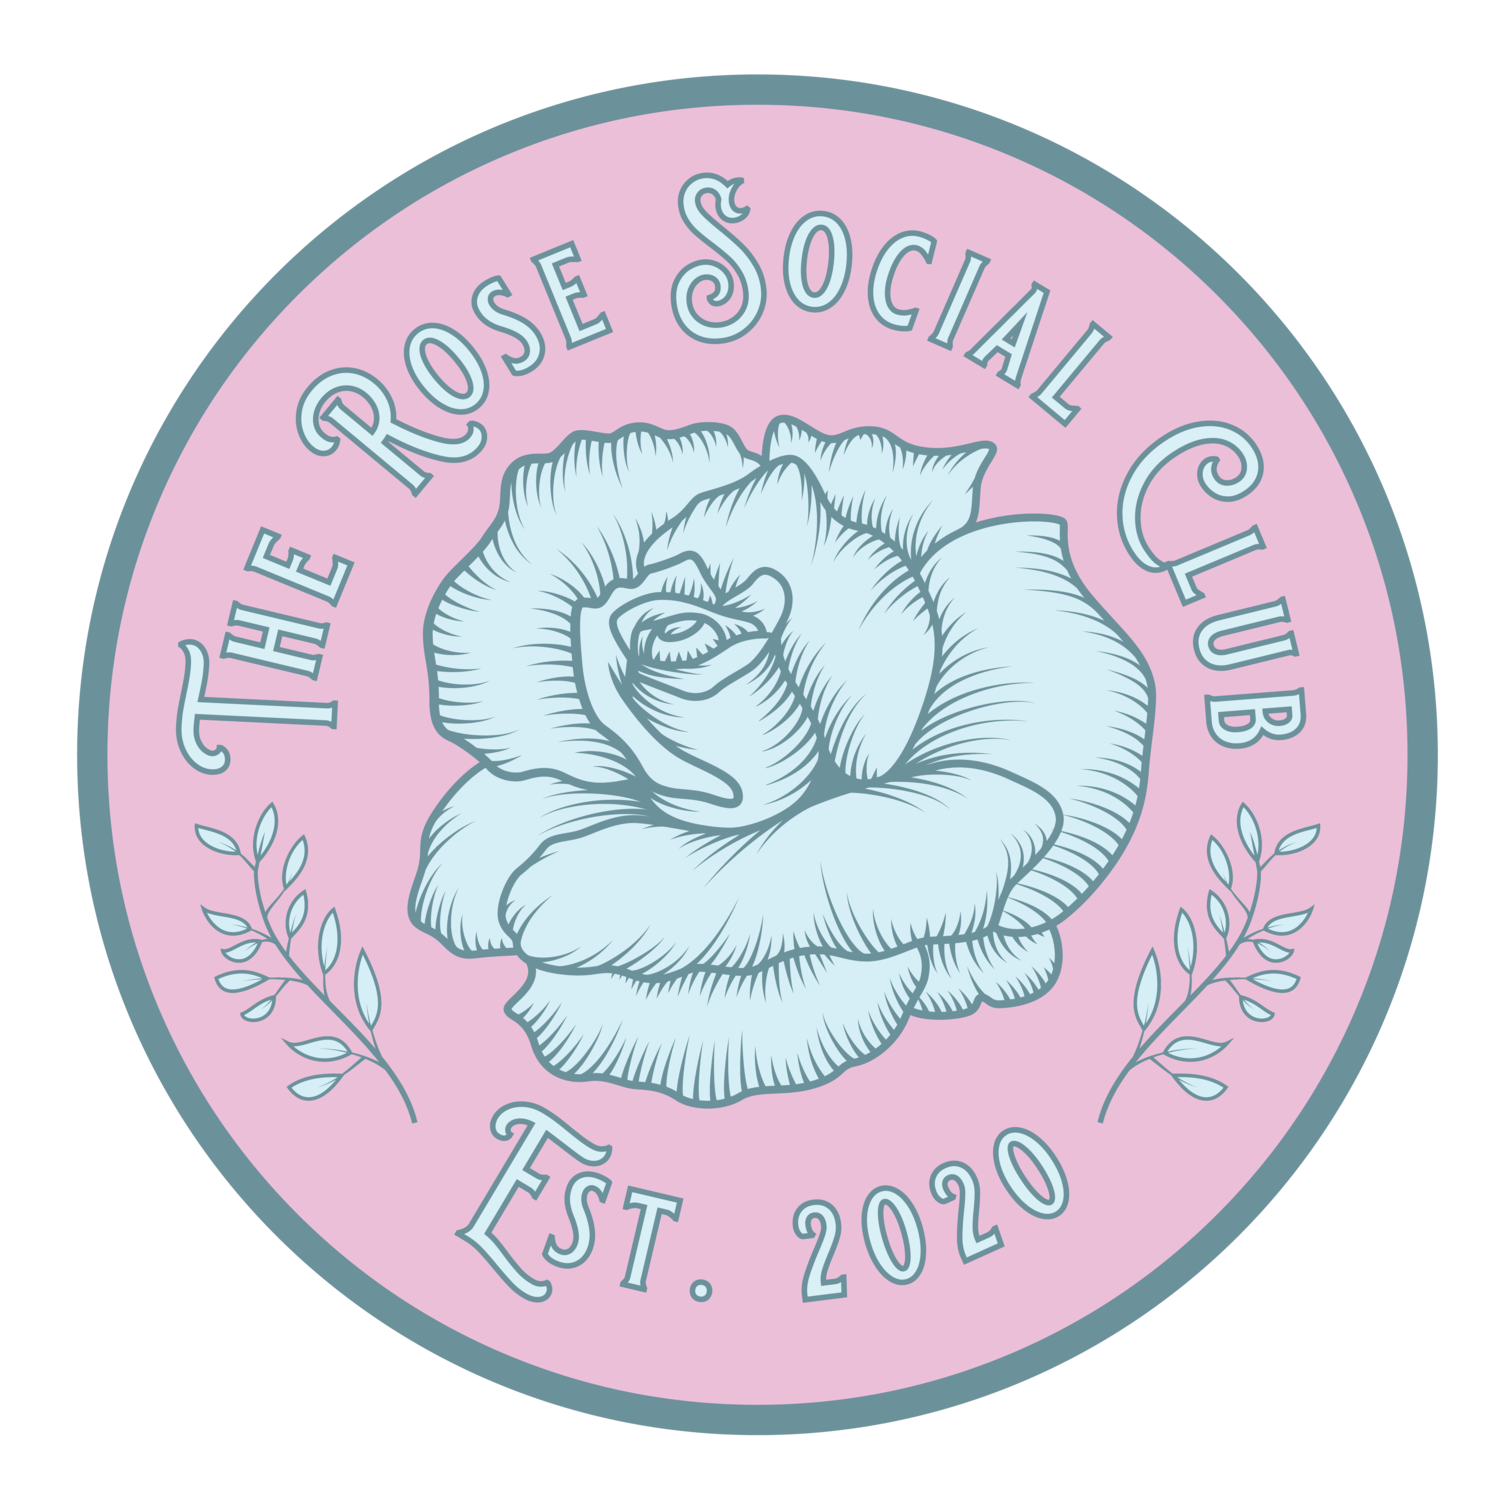 The Rose Social Club